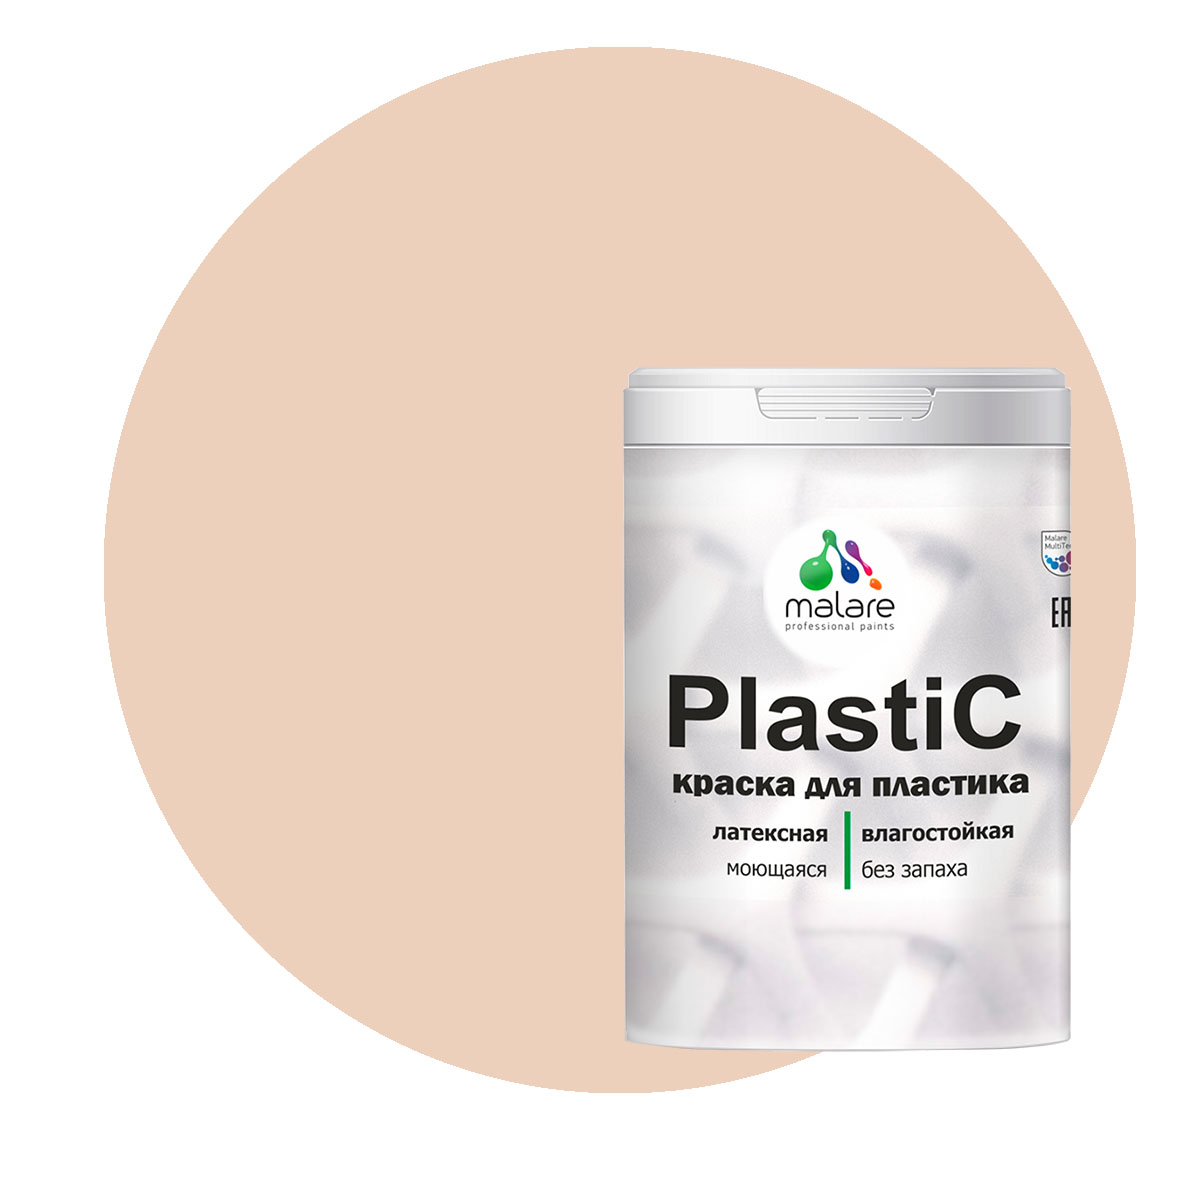 Краска Malare PlastiC для пластика, ПВХ, для сайдинга, эффект дежавю, 2 кг.